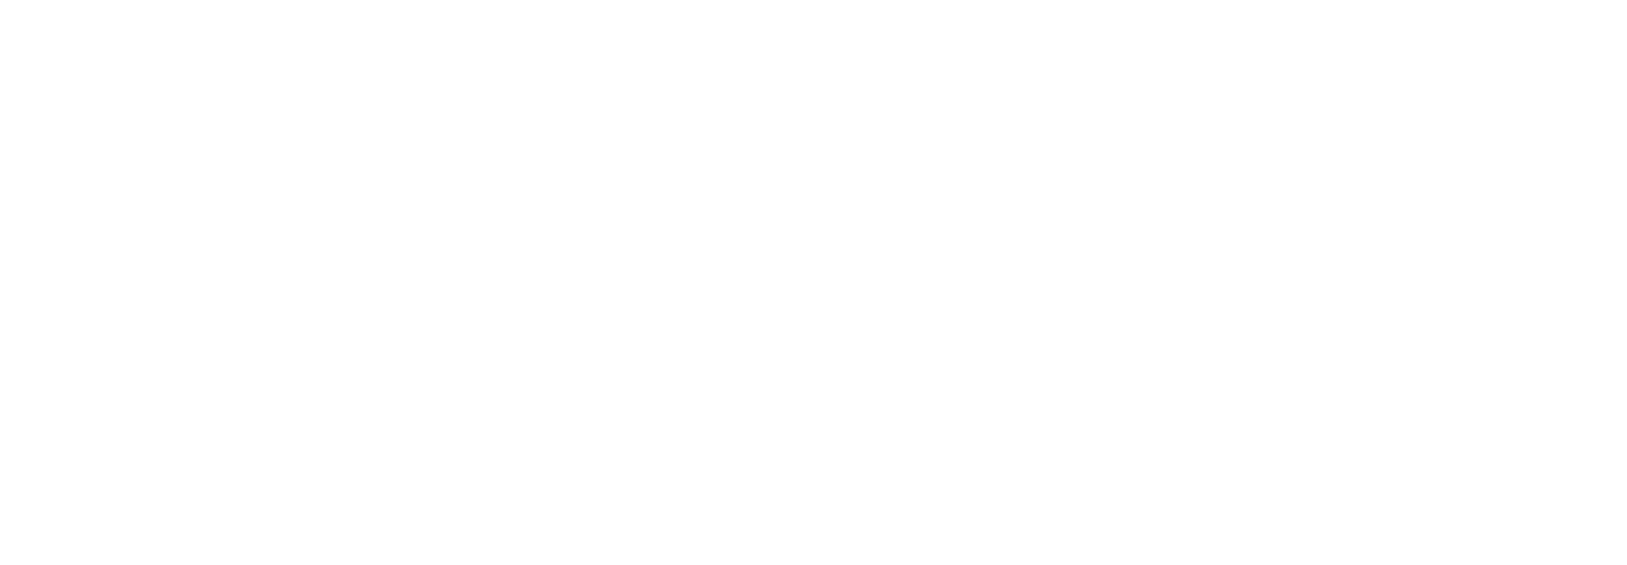 Uber logo pour fonds sombres (PNG transparent)